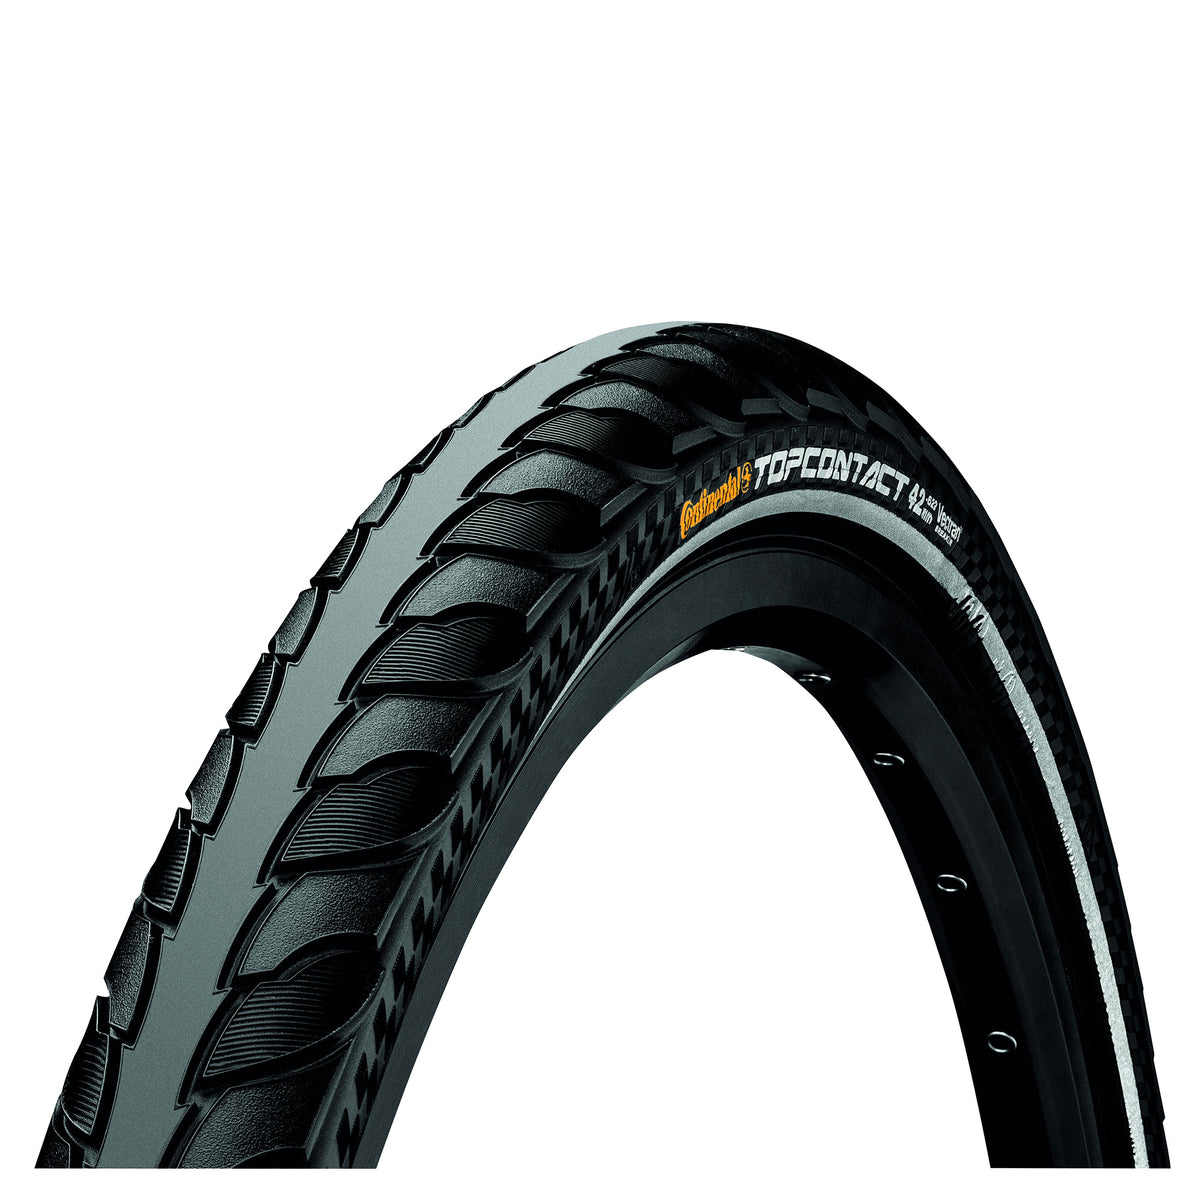 Continental Top Contact II Reflex Folding tyre